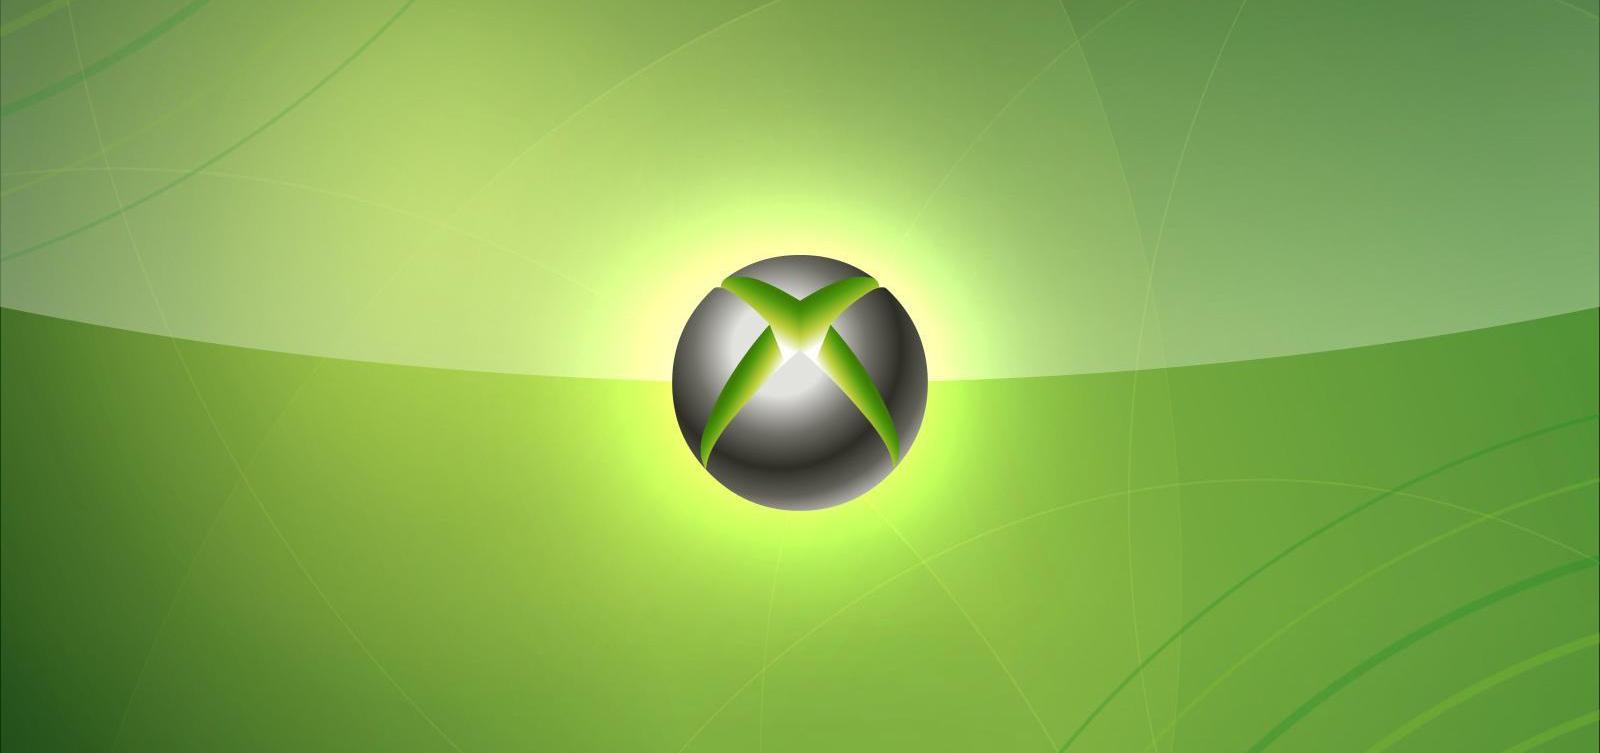 Xbox 360 HD Wallpaper1